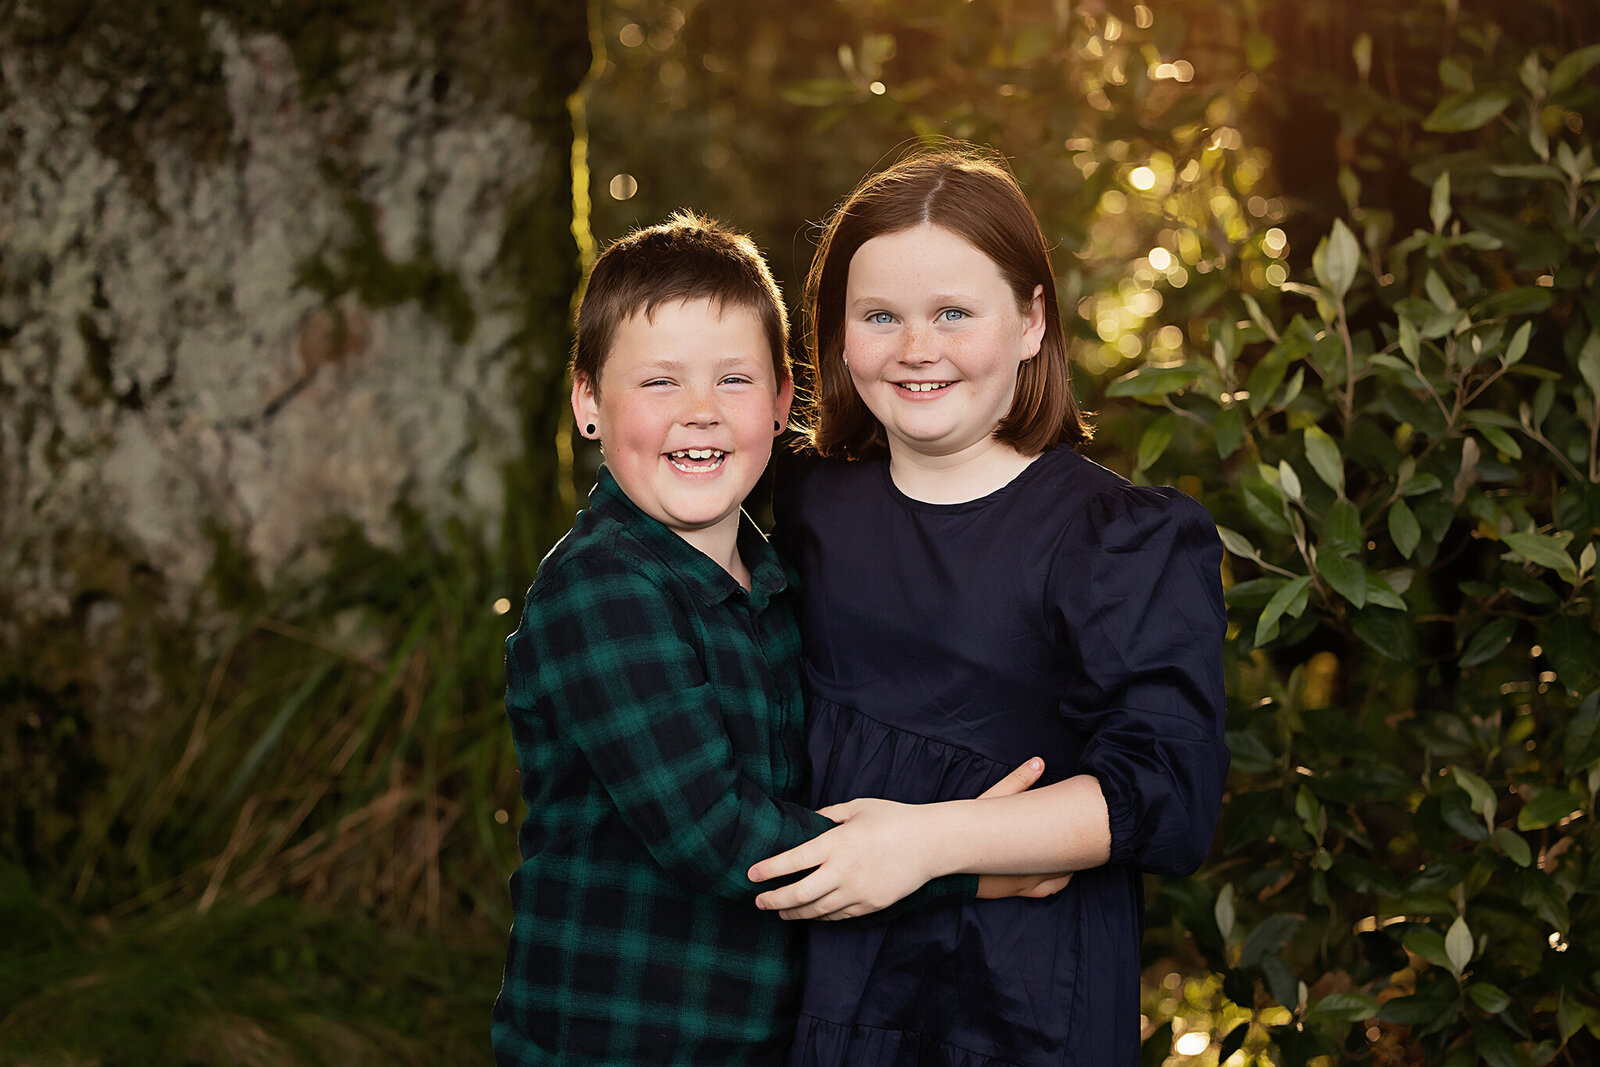 Melbourne Family Bond: Aurora Joy Photography's Cherished Connection